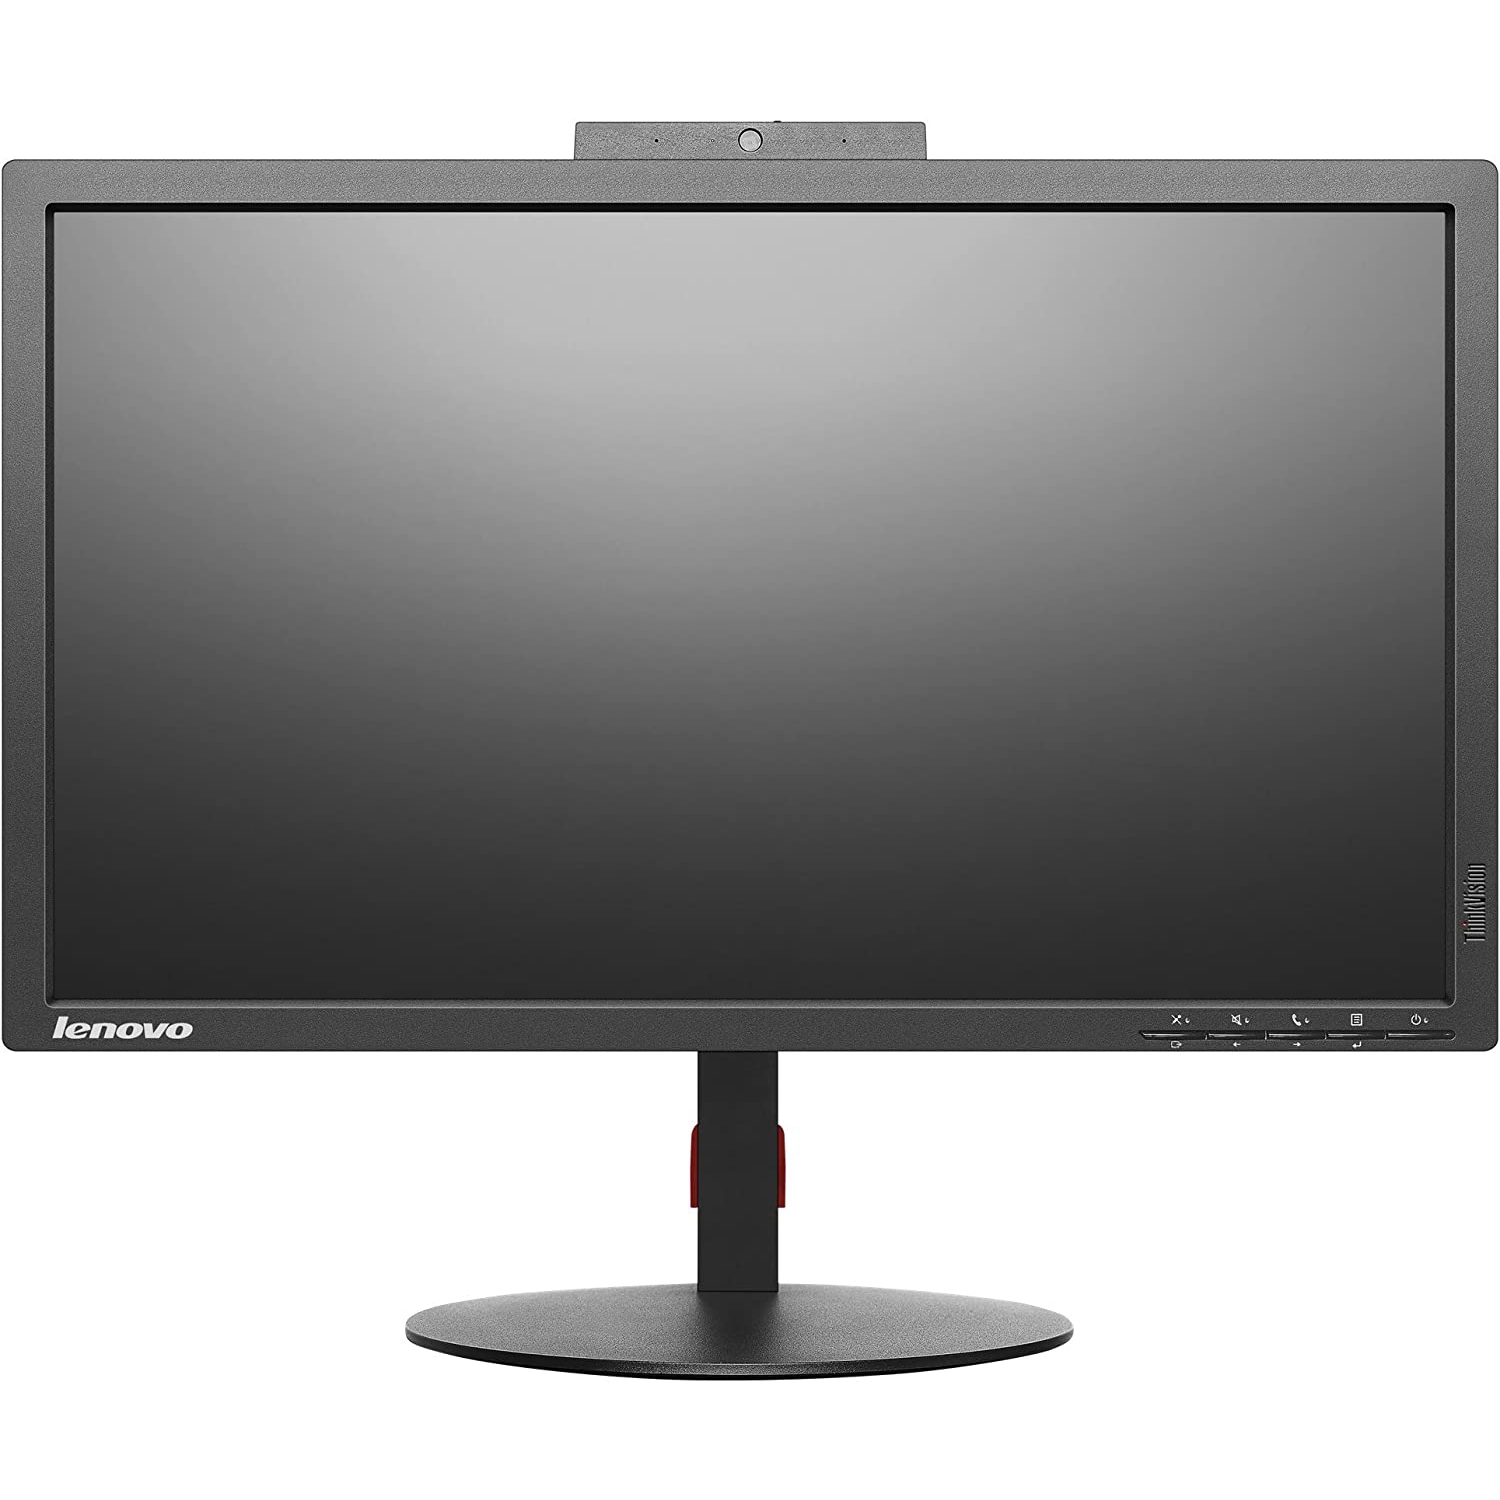 Refurbished (Good) - Lenovo ThinkVision T2224ZD 22" 1080P Monitor with Webcam, HDMI, DisplayPort, VGA & USB Hub